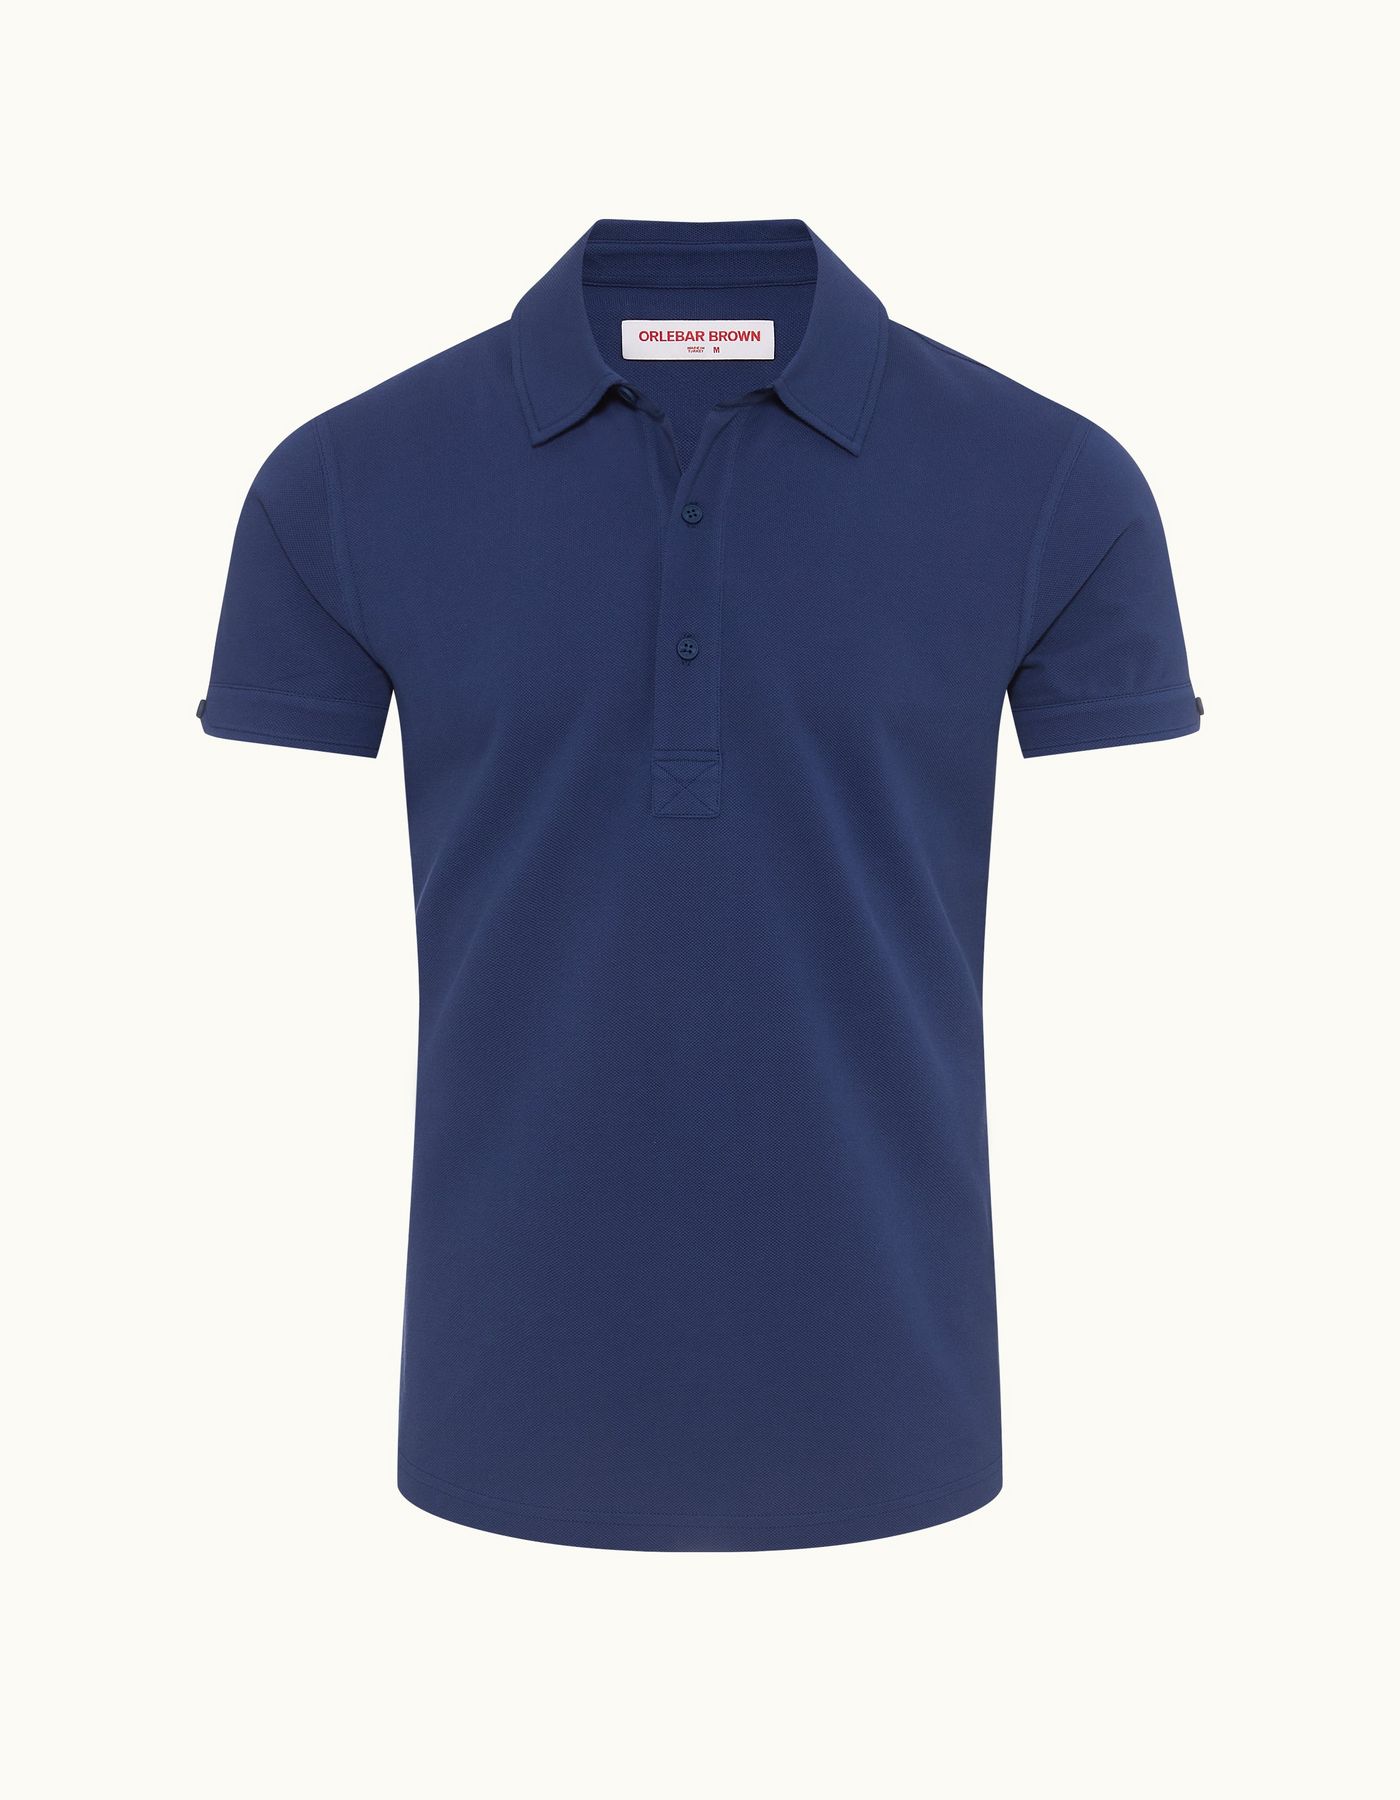 Sebastian - Mens Lagoon Blue Tailored Fit Cotton Polo Shirt